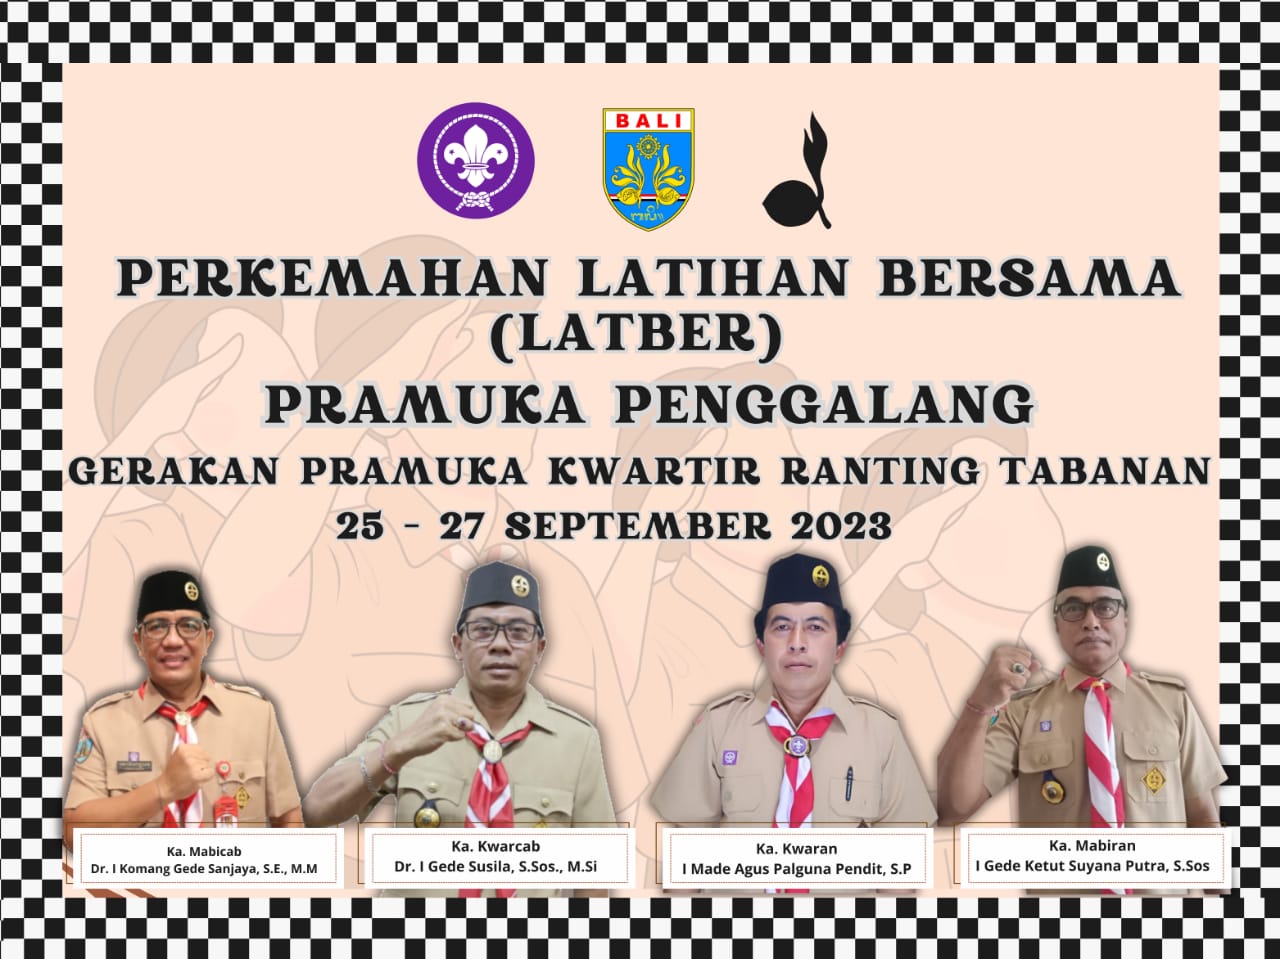 Perkemahan Latihan Bersama (LATBER) Pramuka Kwartir Ranting Tabanan.